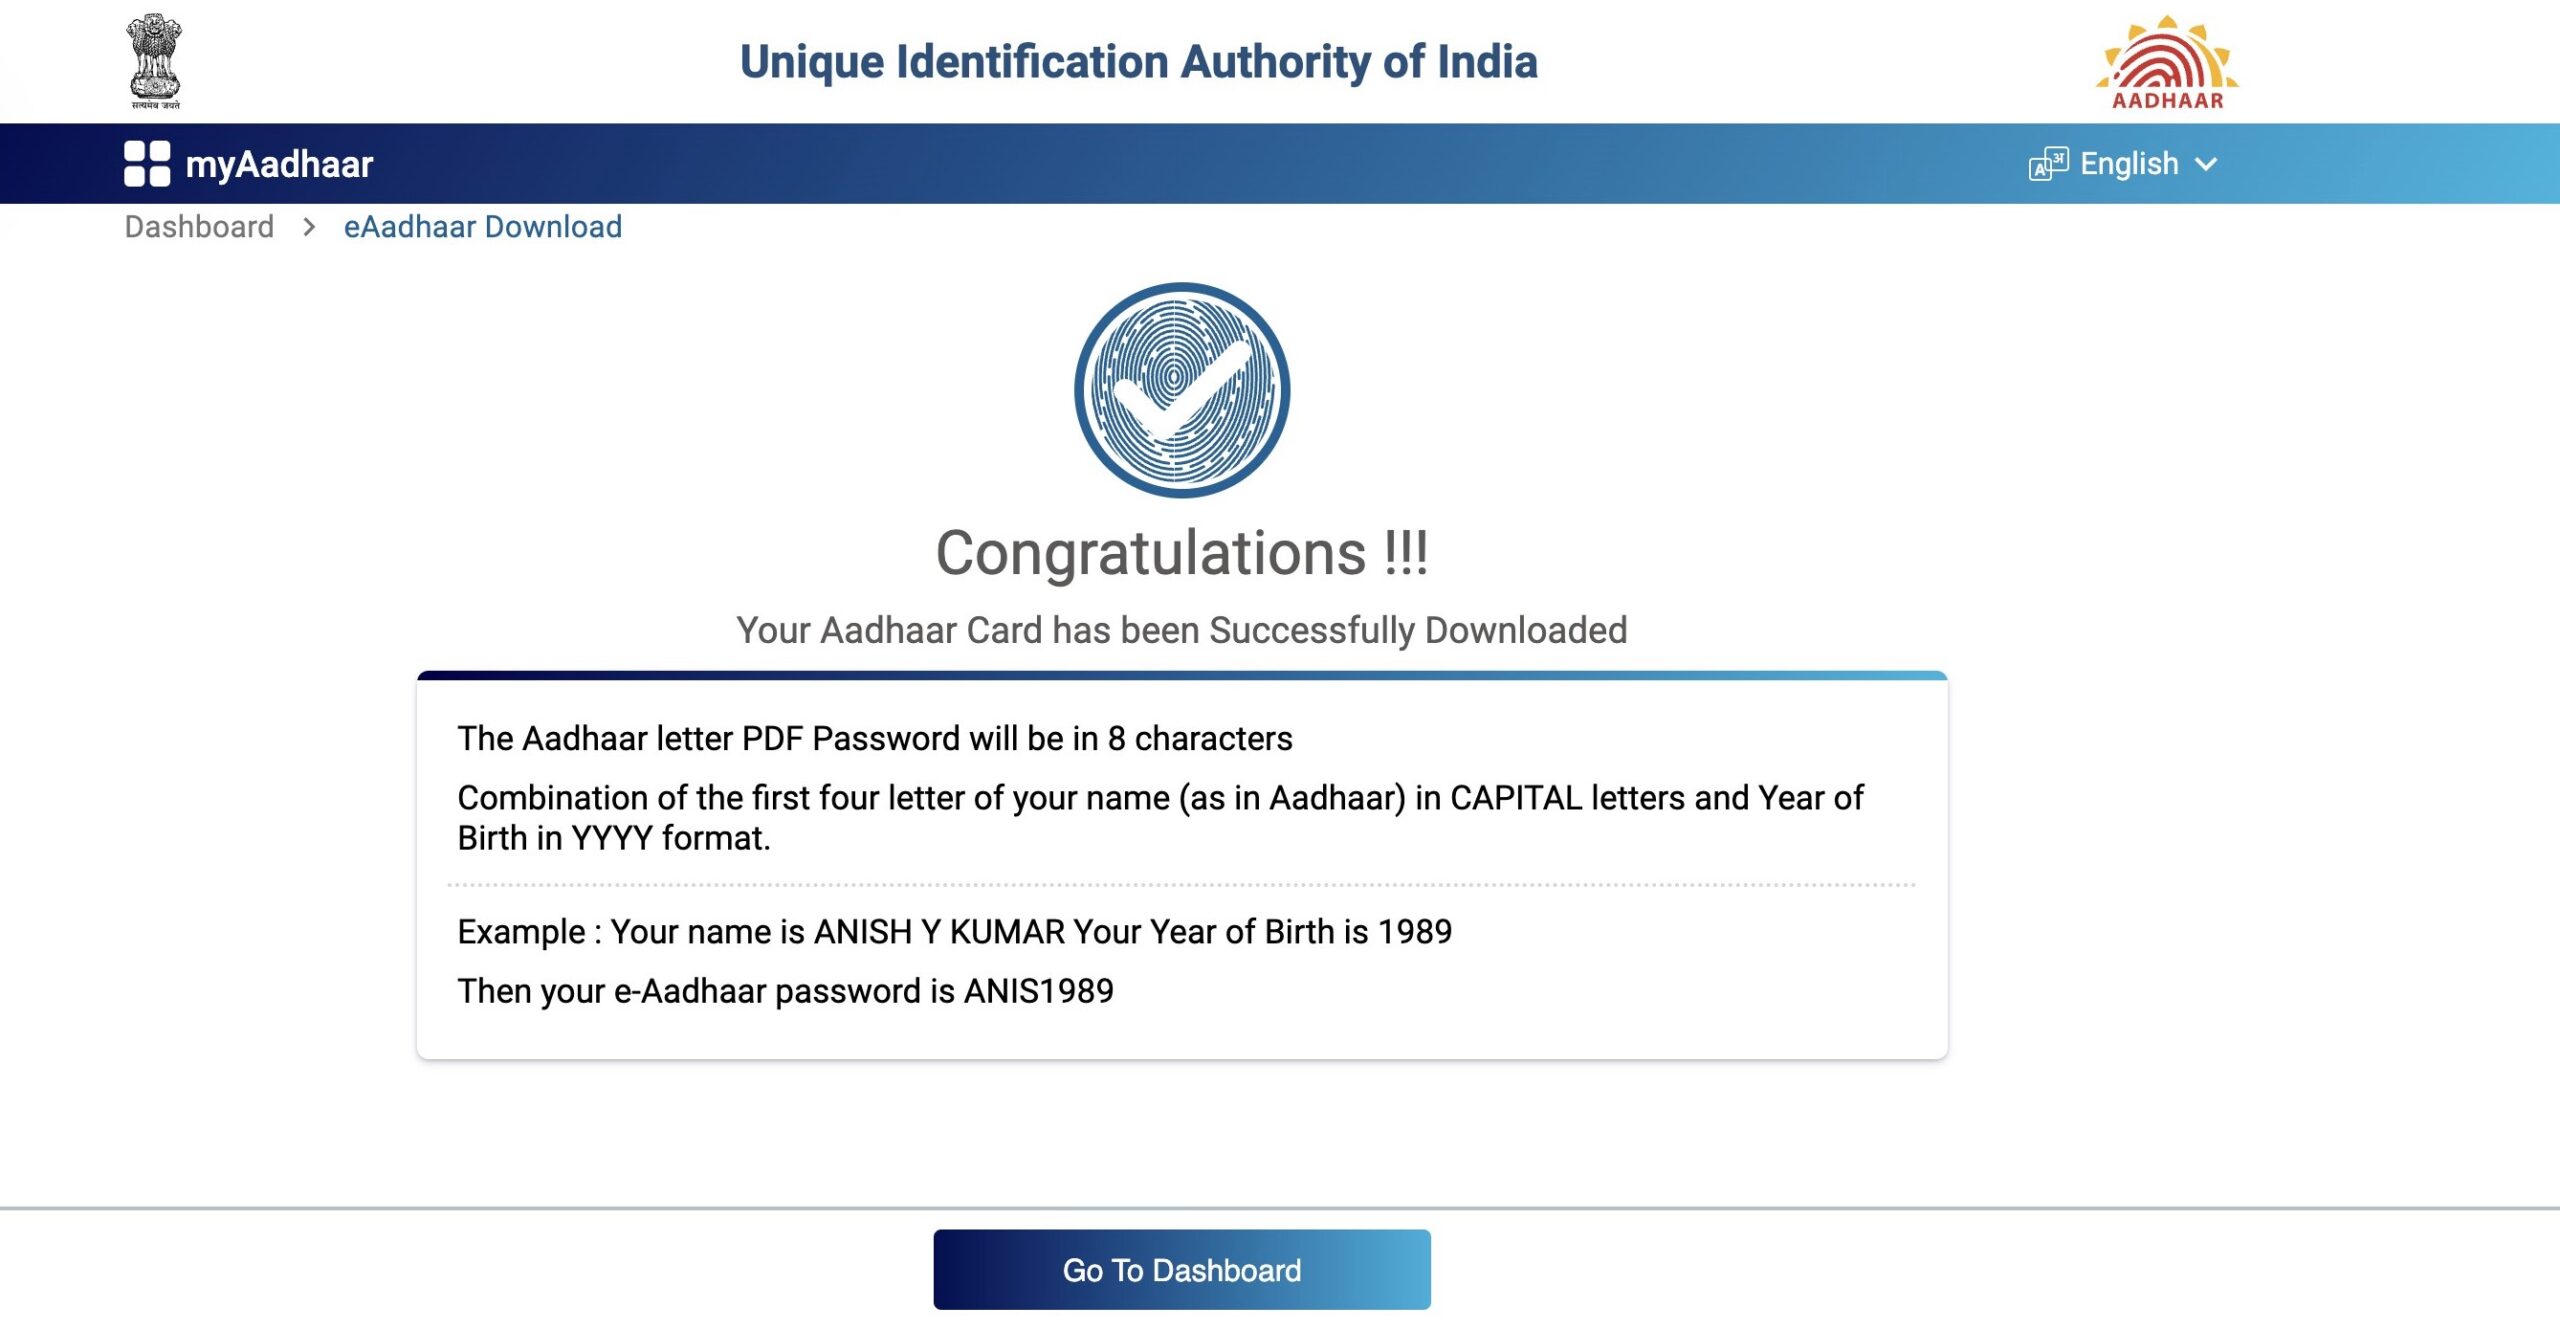 Congratulations !!! Your Aadhaar Card has been successfully downloaded